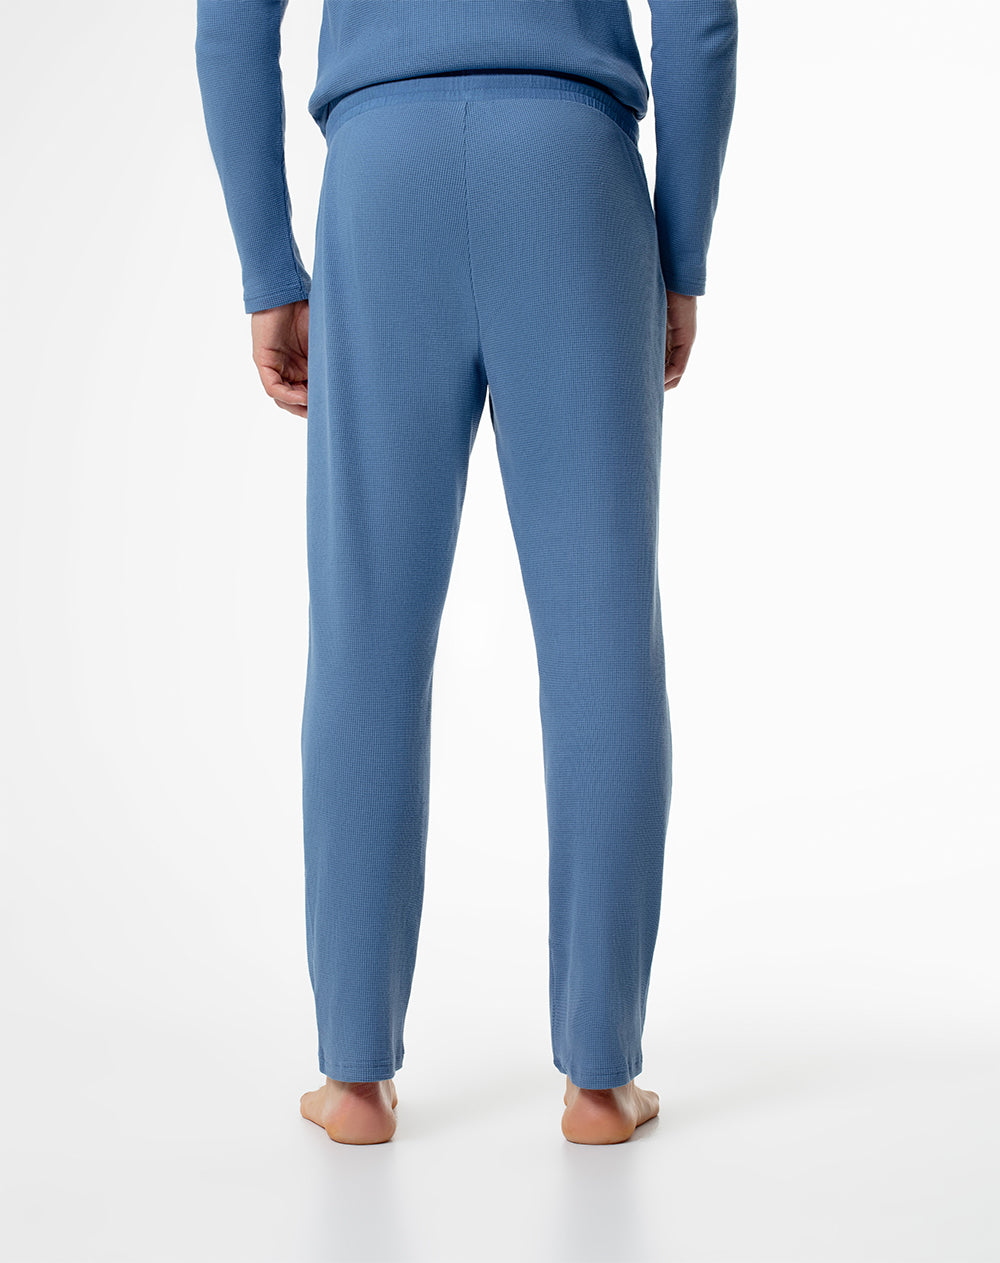 Pantalón regular fit tiro alto azul